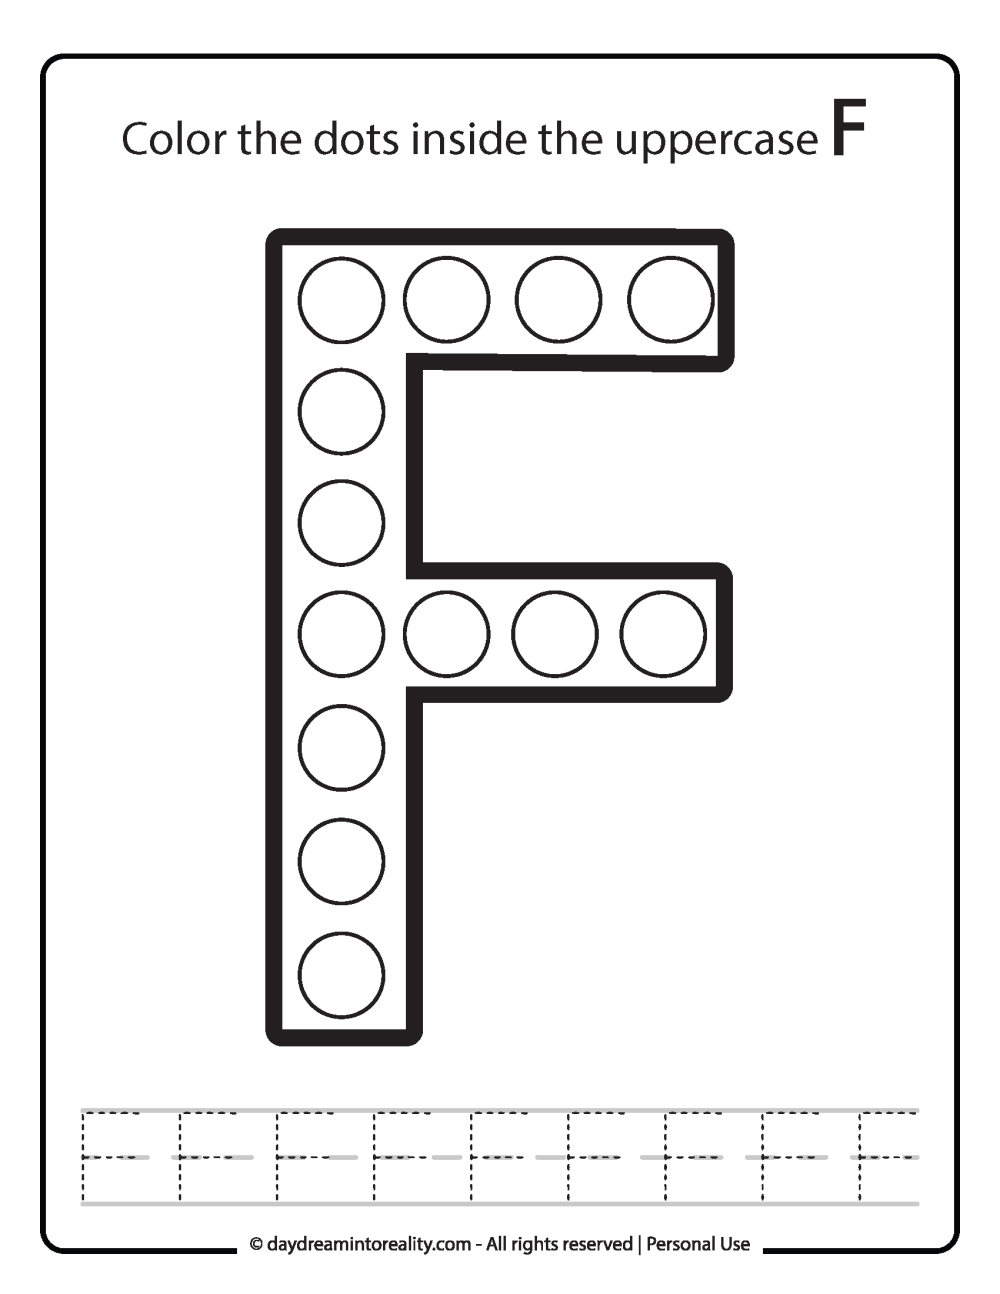 Uppercase "F" Dot Marker Worksheet Free Printable activity for kids (preschool, kindergarten)